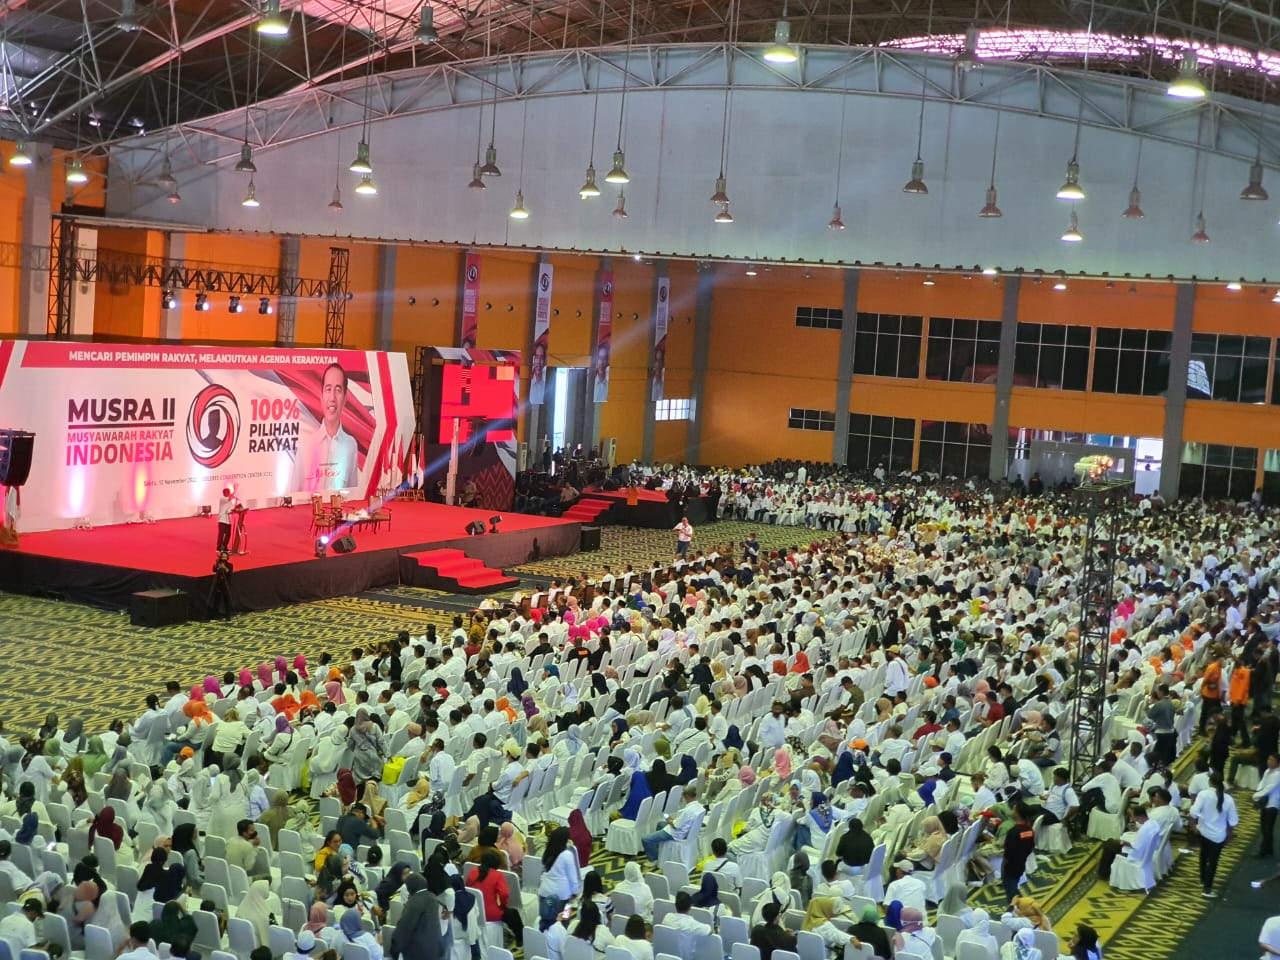 Ribuan Peserta yang hadir dalam gelaran acara Musyawarah Rakyat (Musra) di Makassar. (Foto: Istimewa)